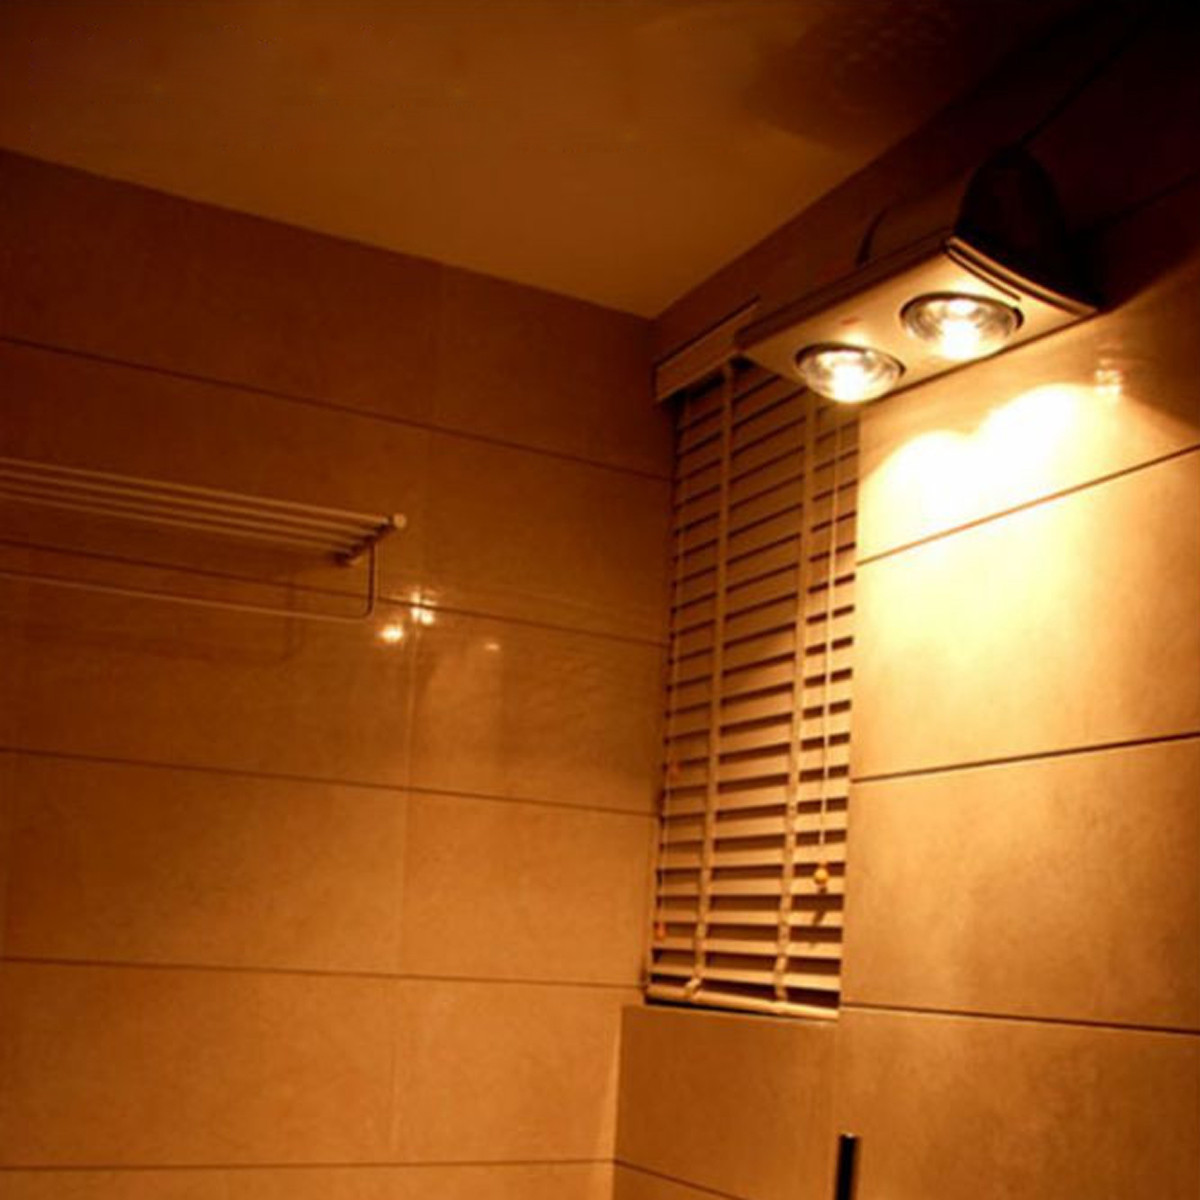 Bathroom Ceiling Light With Heater
 BATHROOM 3 IN 1 CEILING LIGHT HEATER FAN with 2 HEAT LAMP